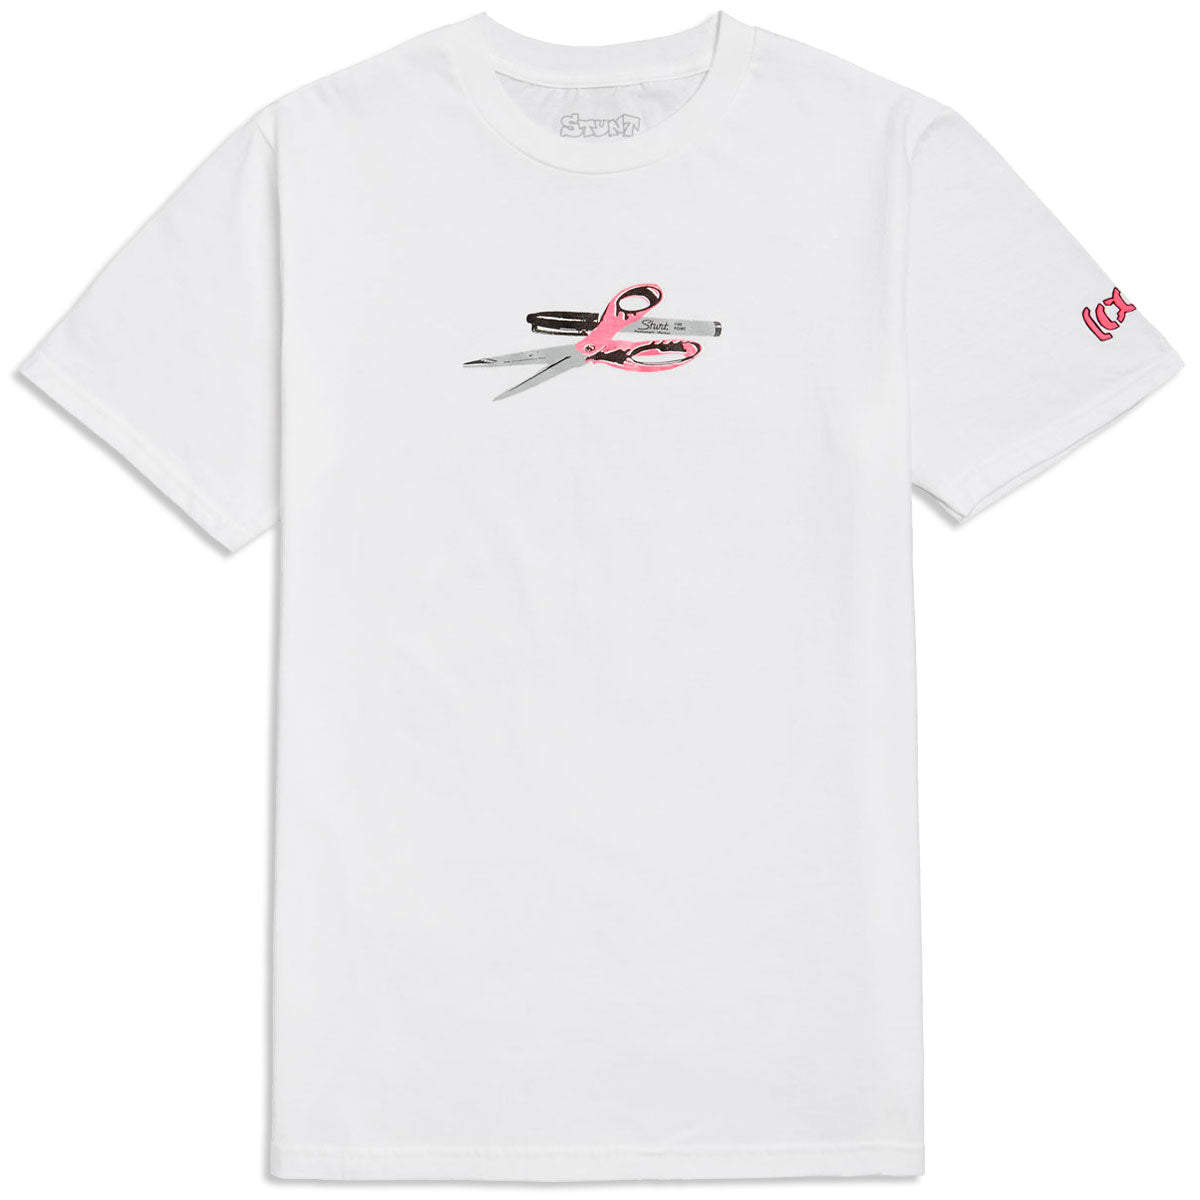 Stunt x CCS Catalog Toolkit T-Shirt - White image 1